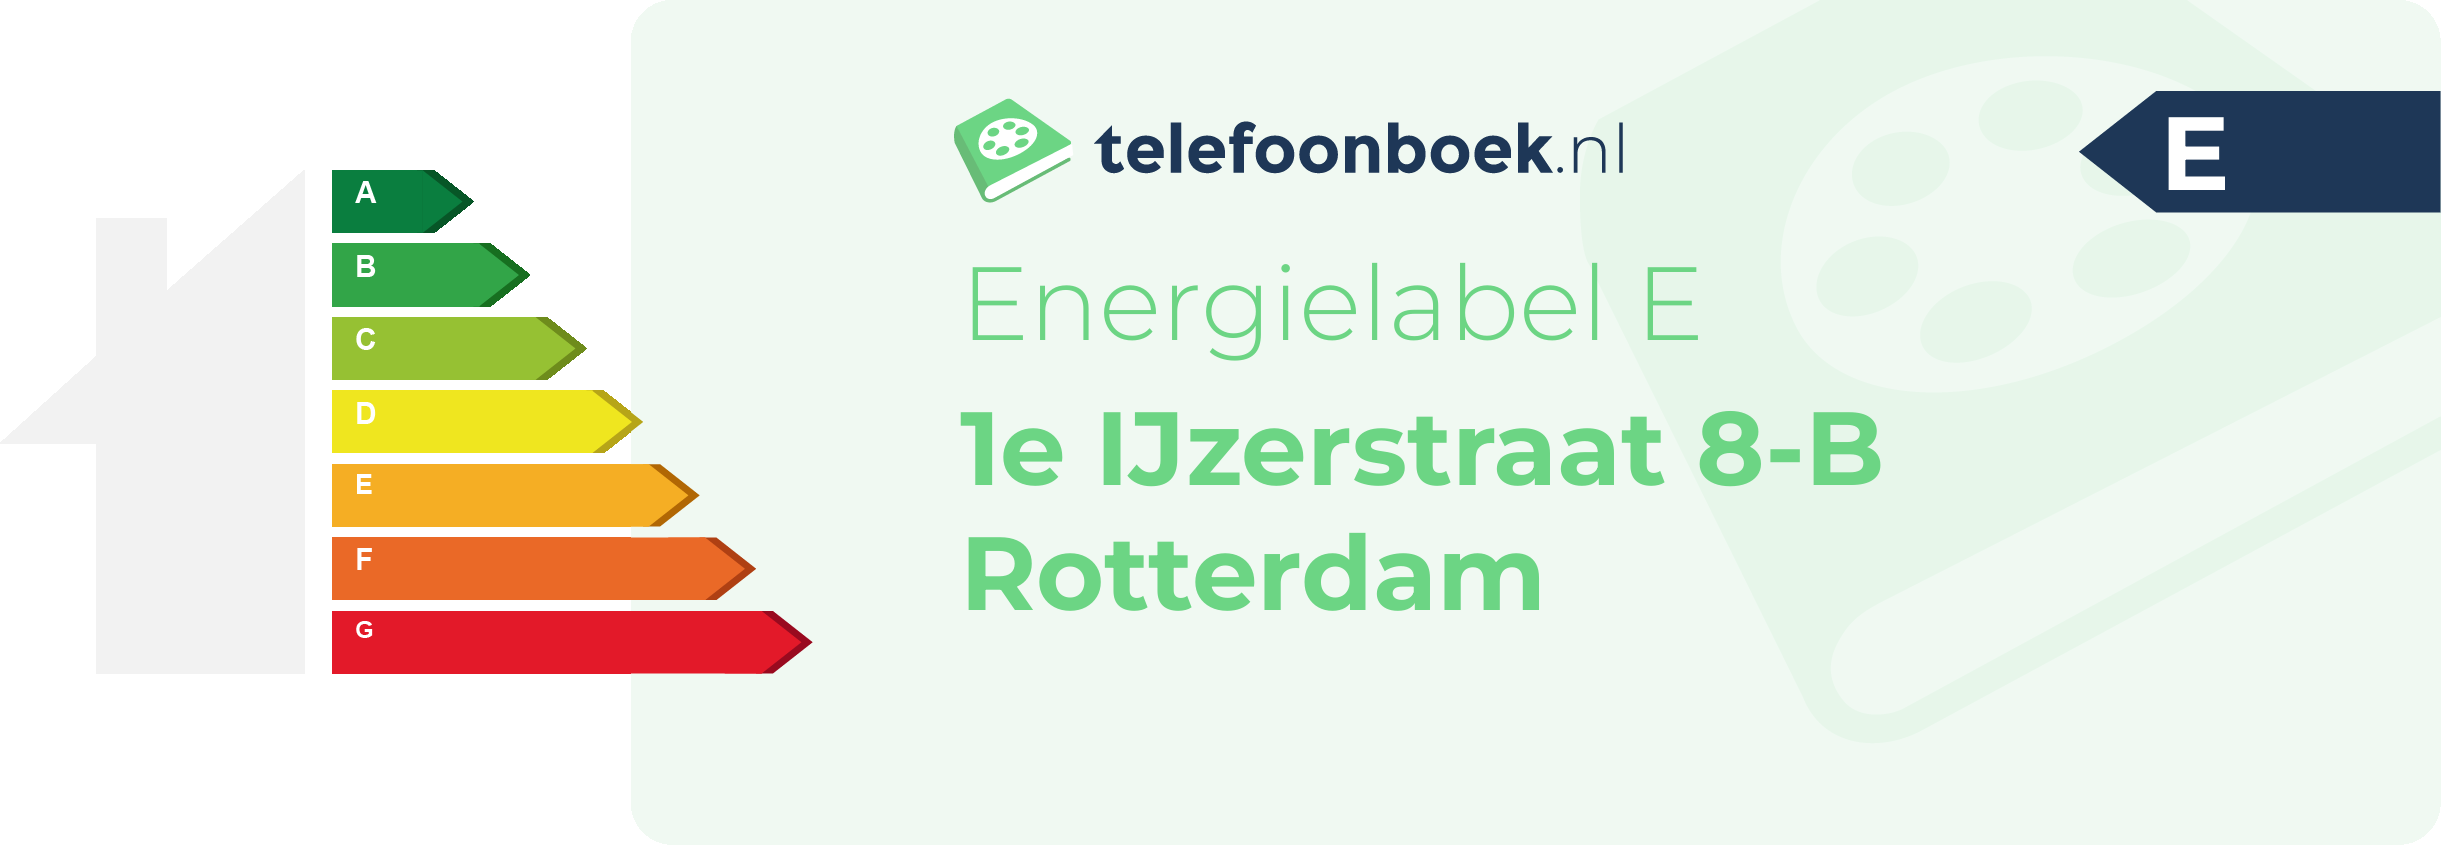 Energielabel 1e IJzerstraat 8-B Rotterdam